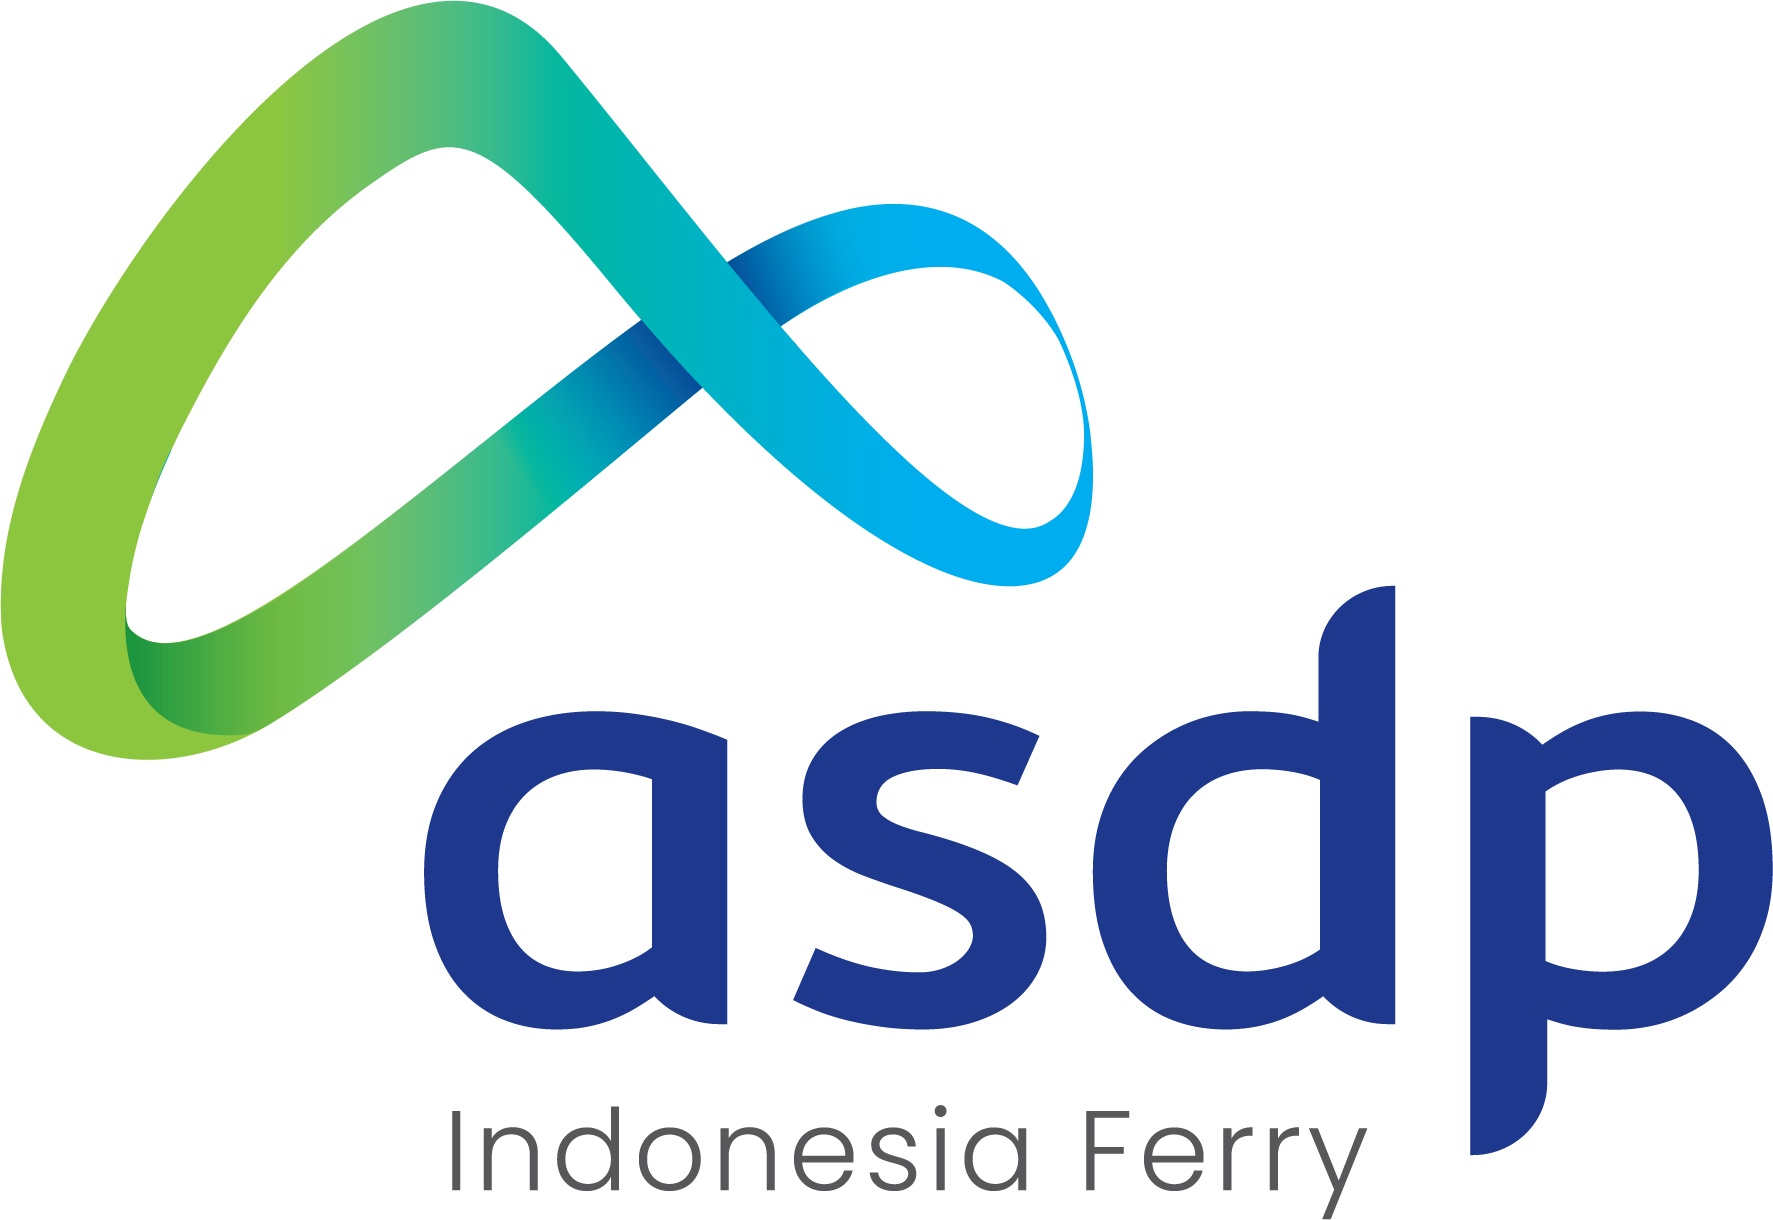 ASDP Indonesia Ferry